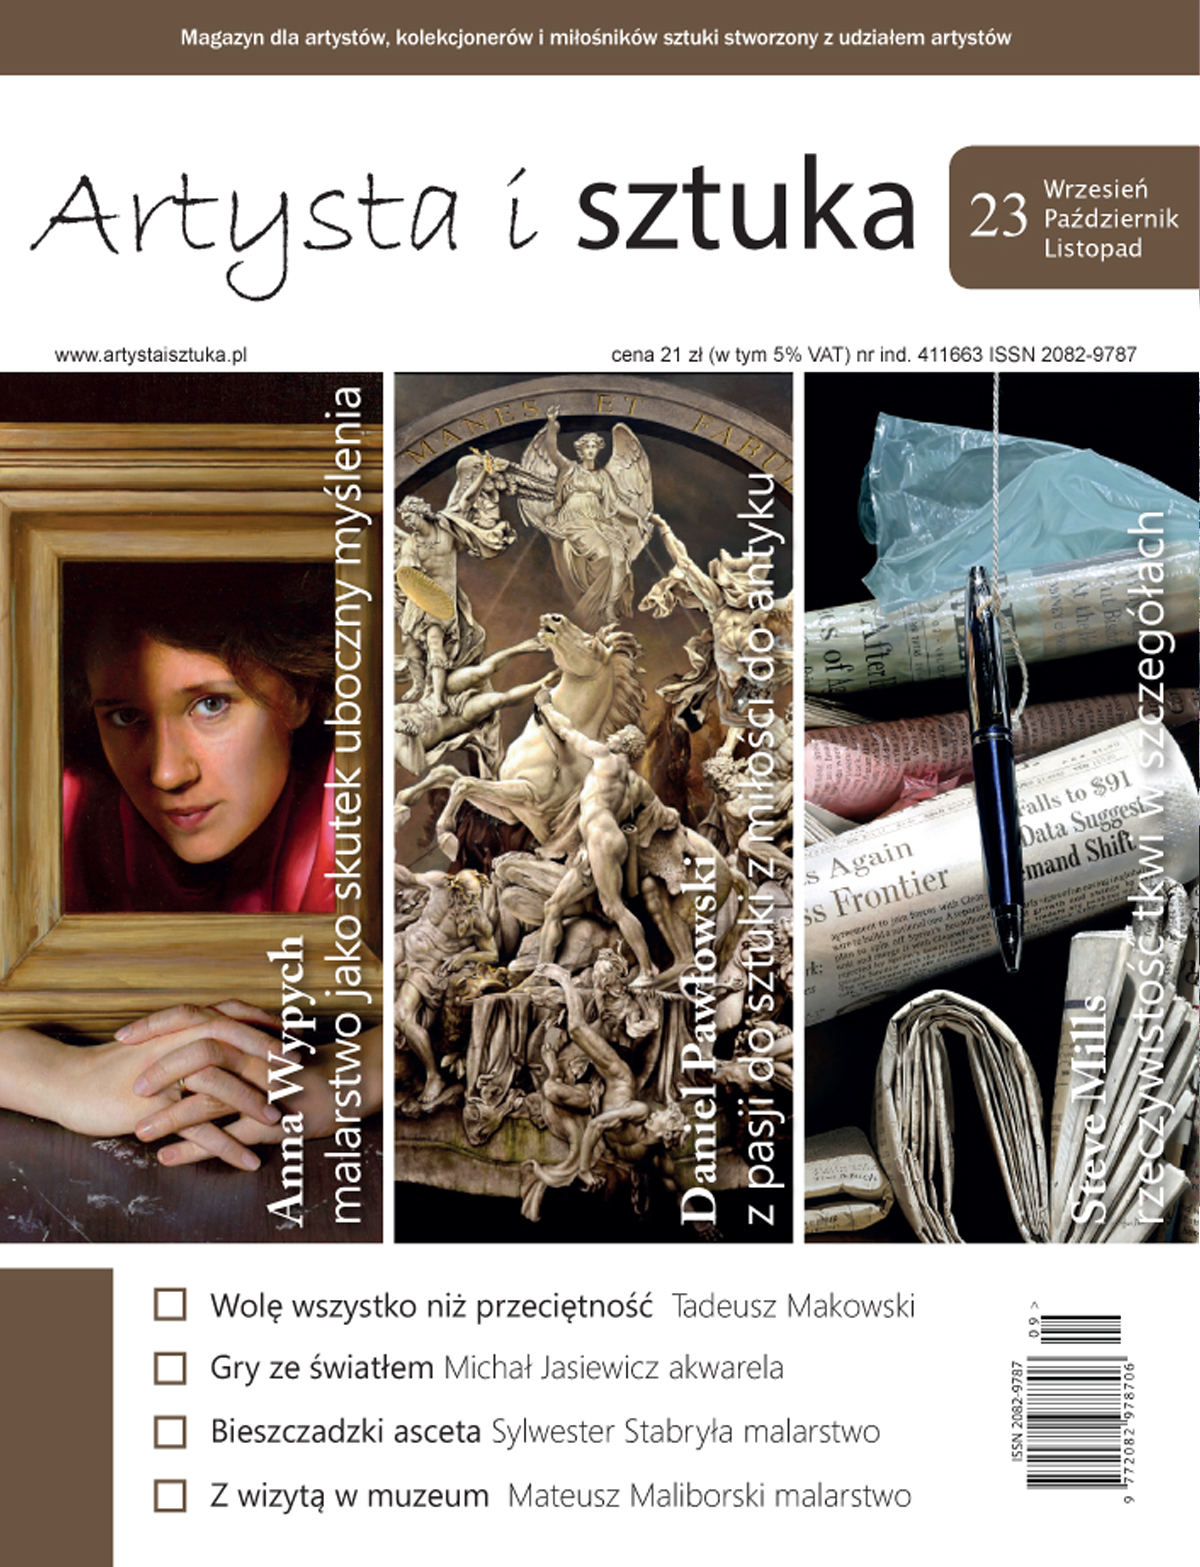 artysta i sztuka, artysta isztuka 23, magazyn o sztuce, kwartalnik, czasopismo o sztuce